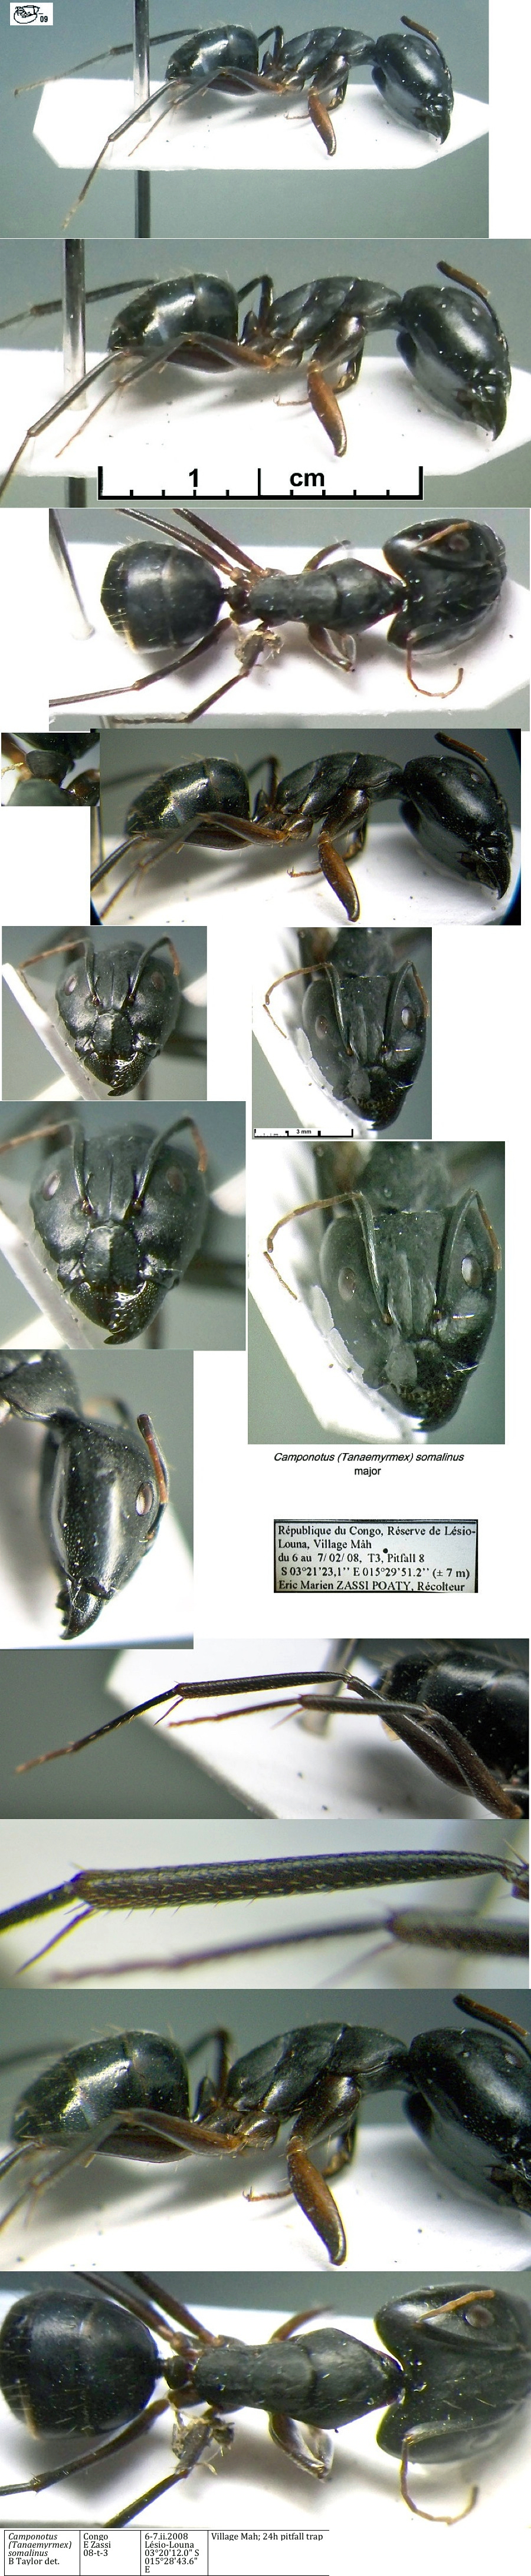 {Camponotus somalinus major}